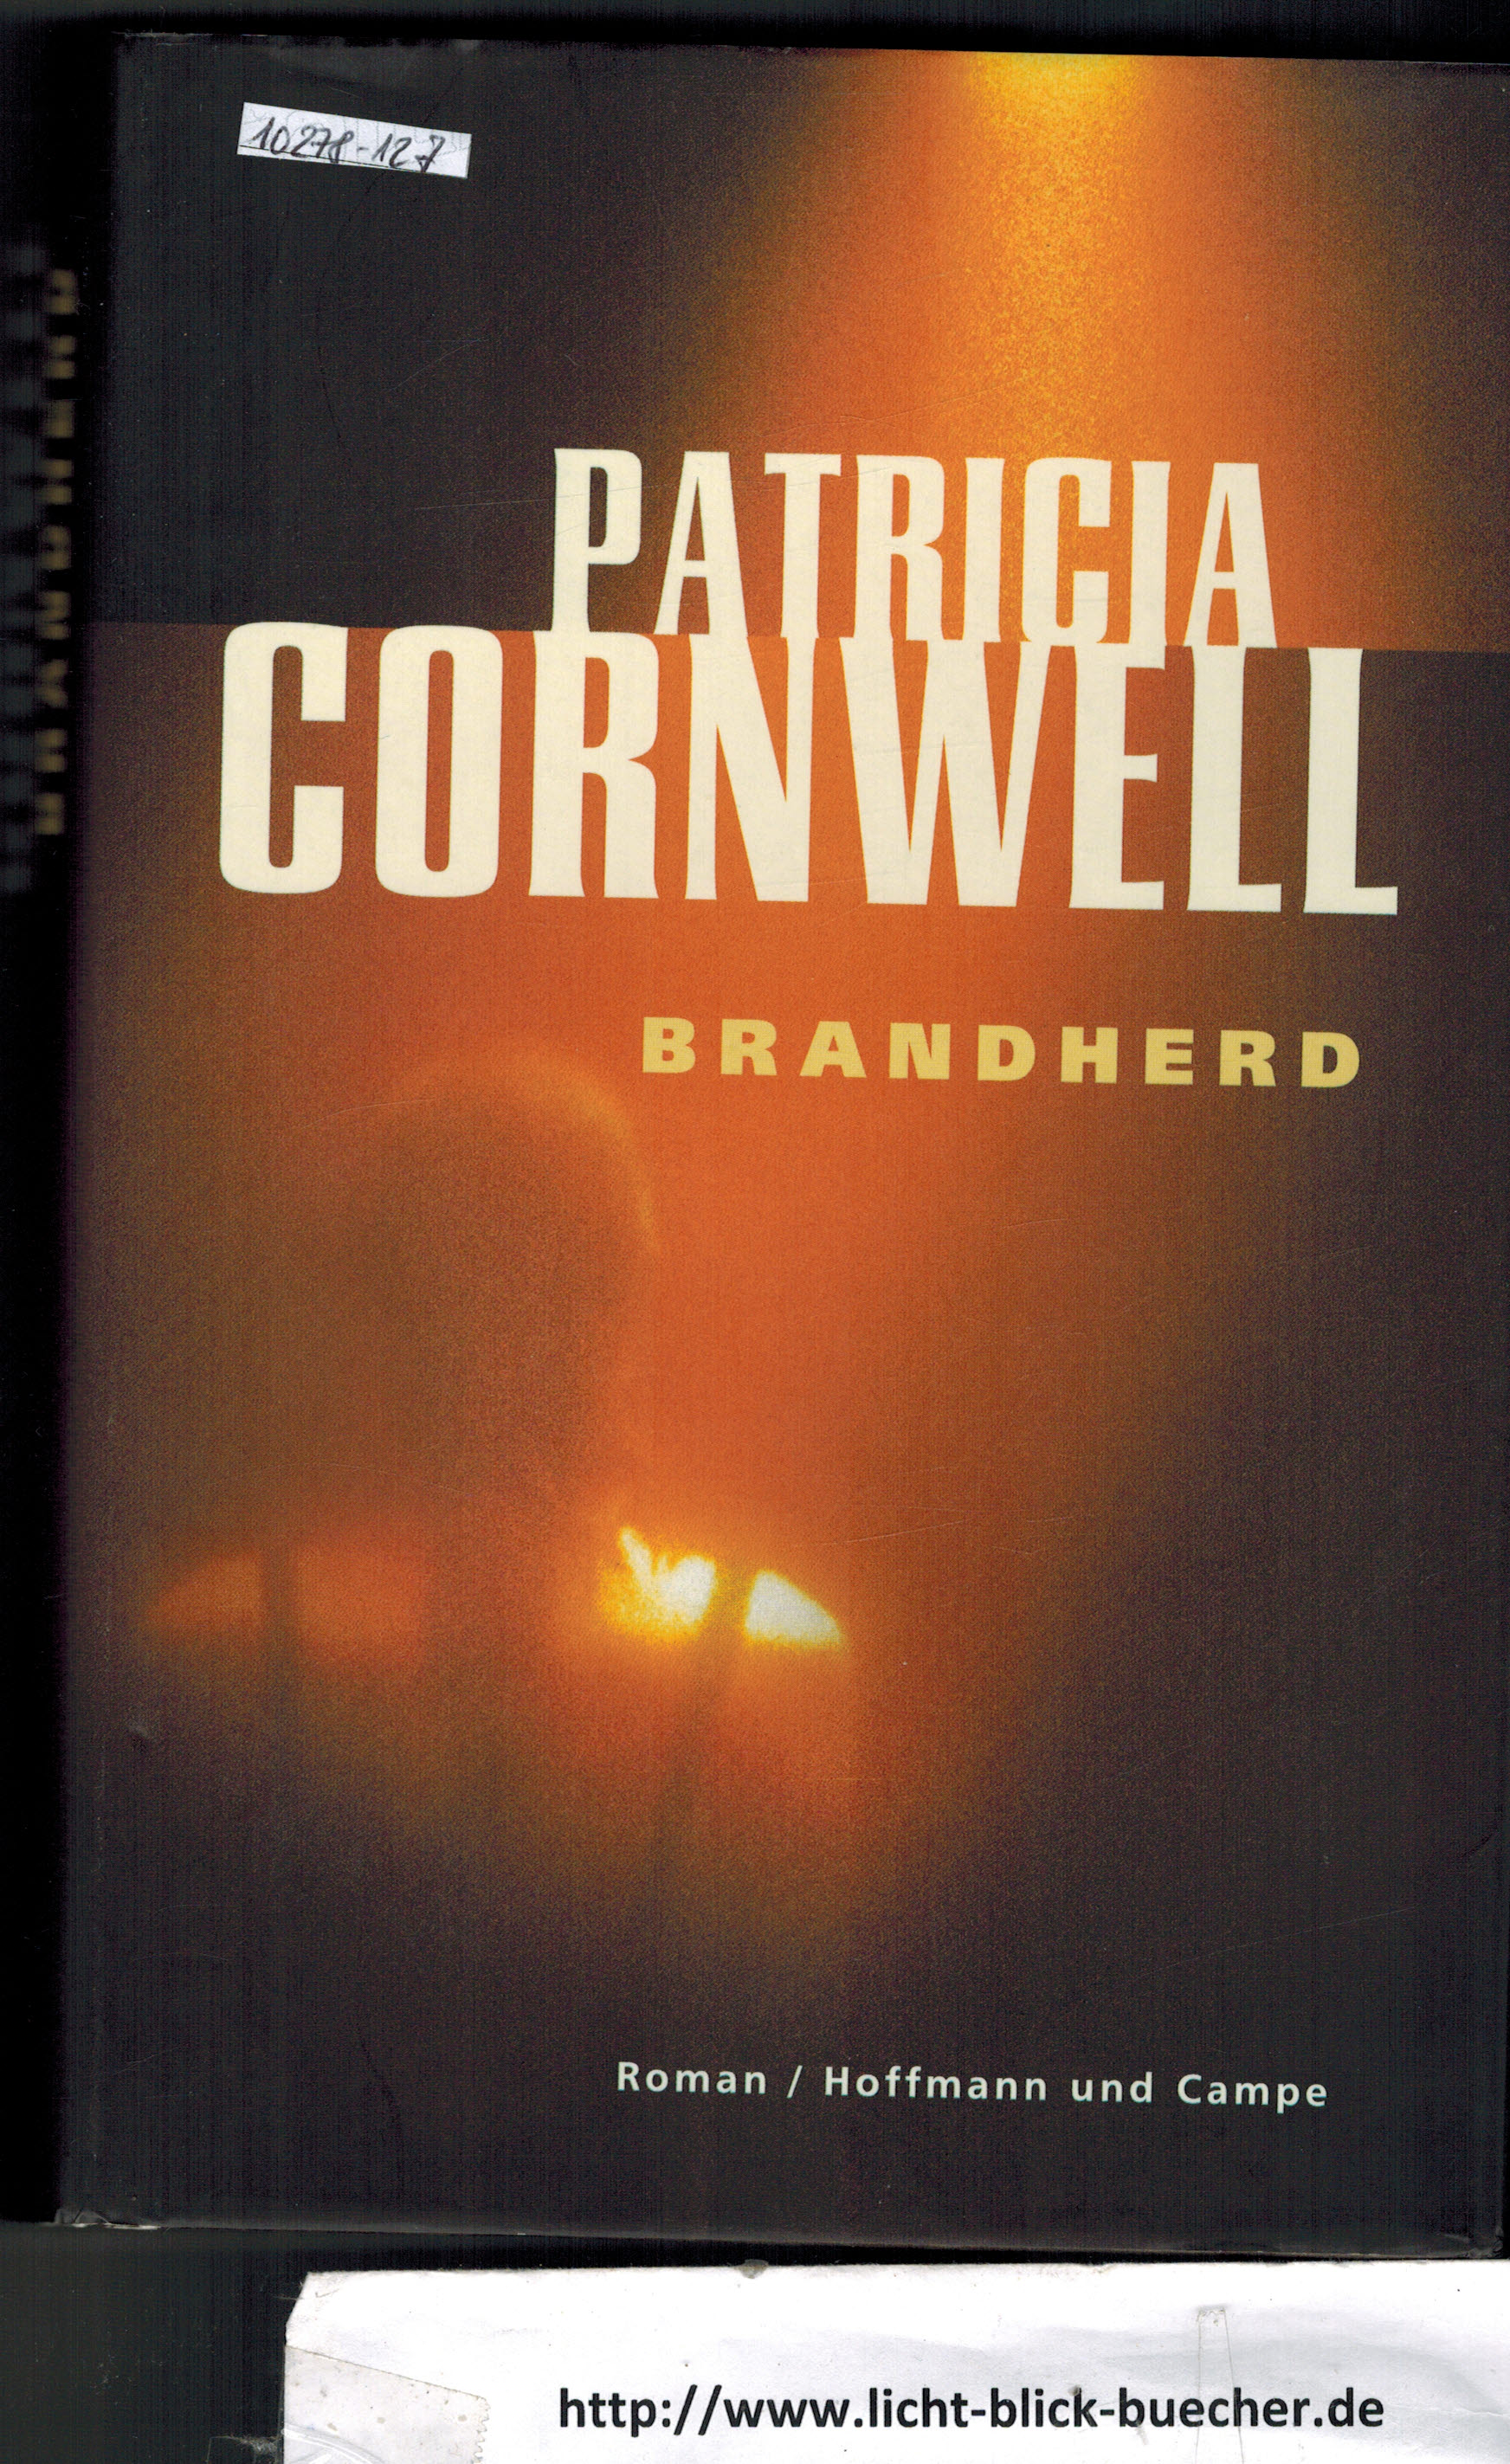 BrandherdPatricia Cornwell